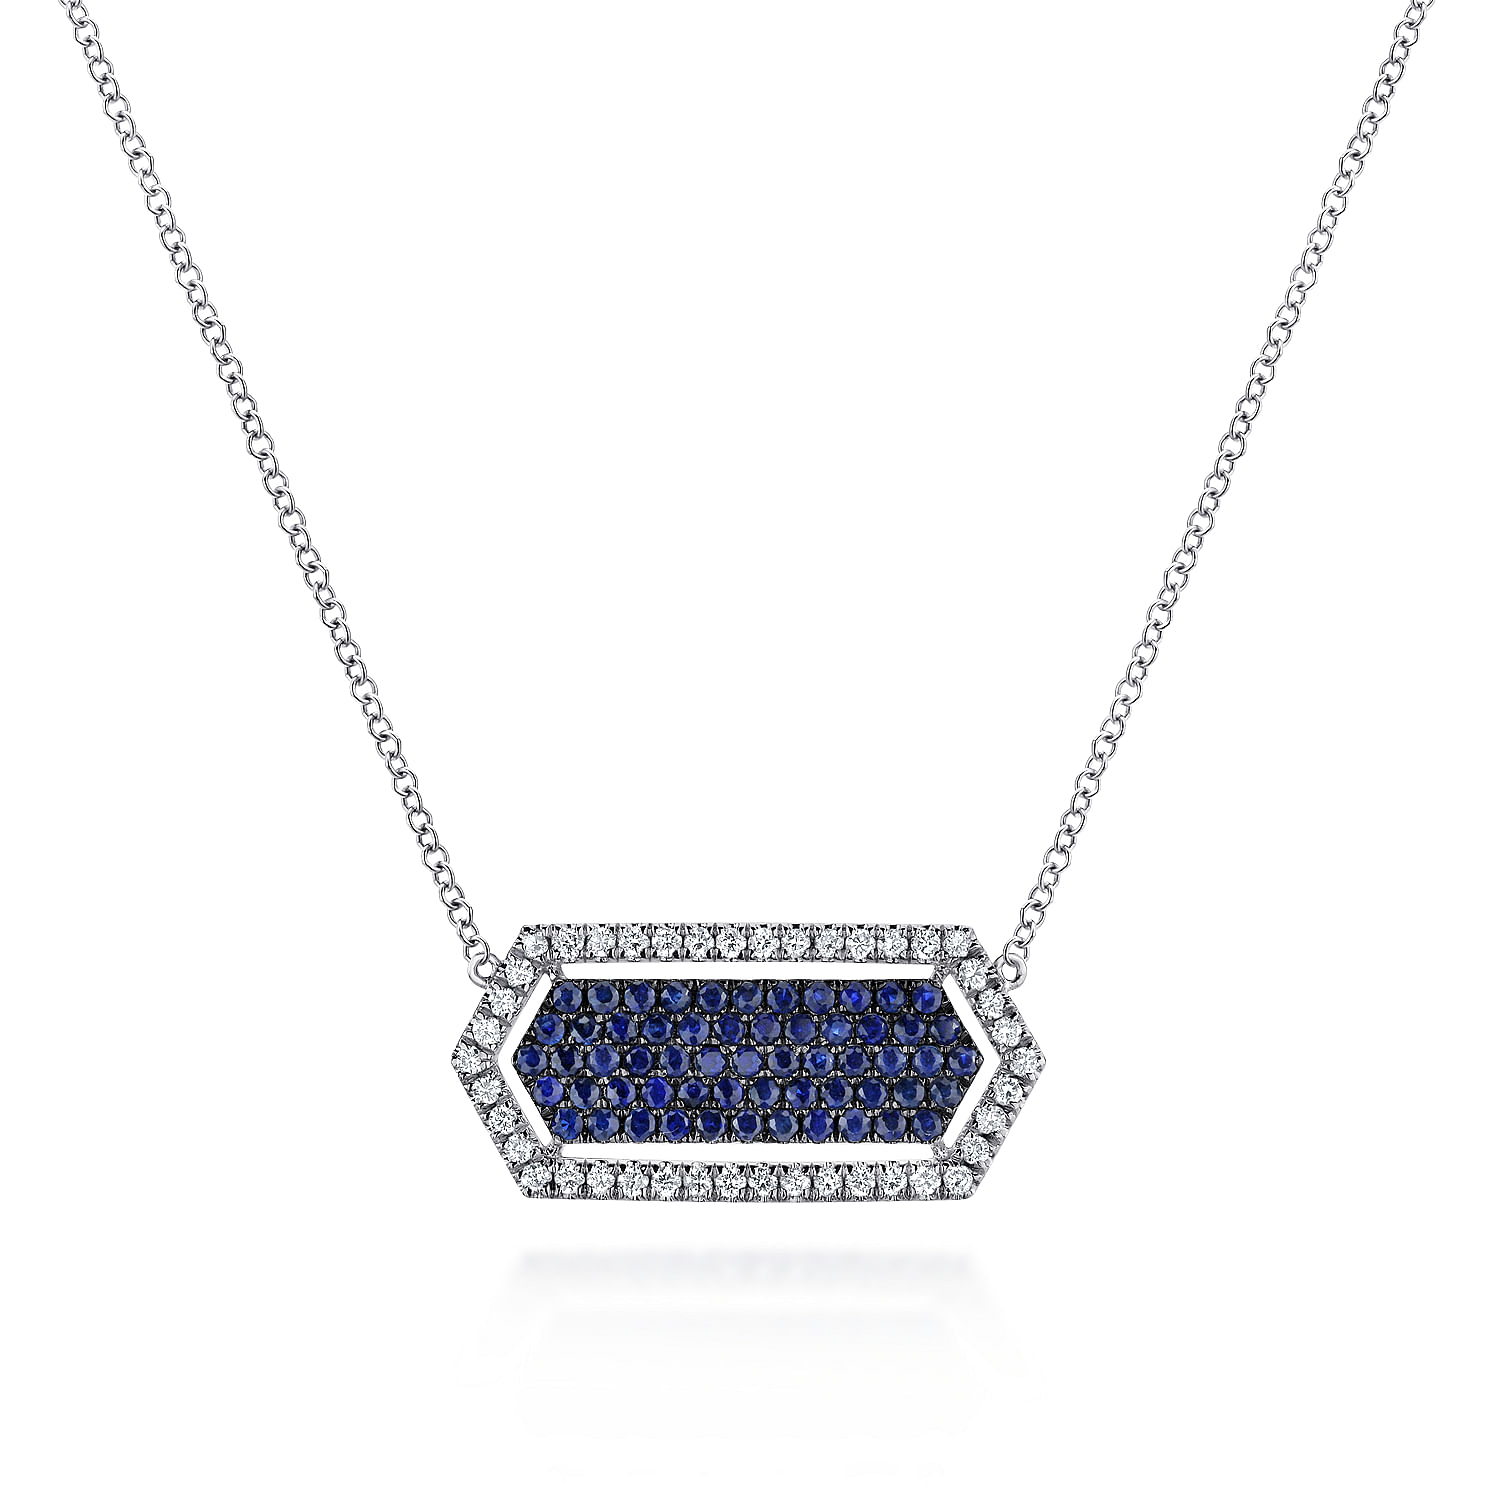 Gabriel - 14K White Gold Elongated Hexagonal Diamond and Sapphire Pendant Necklace